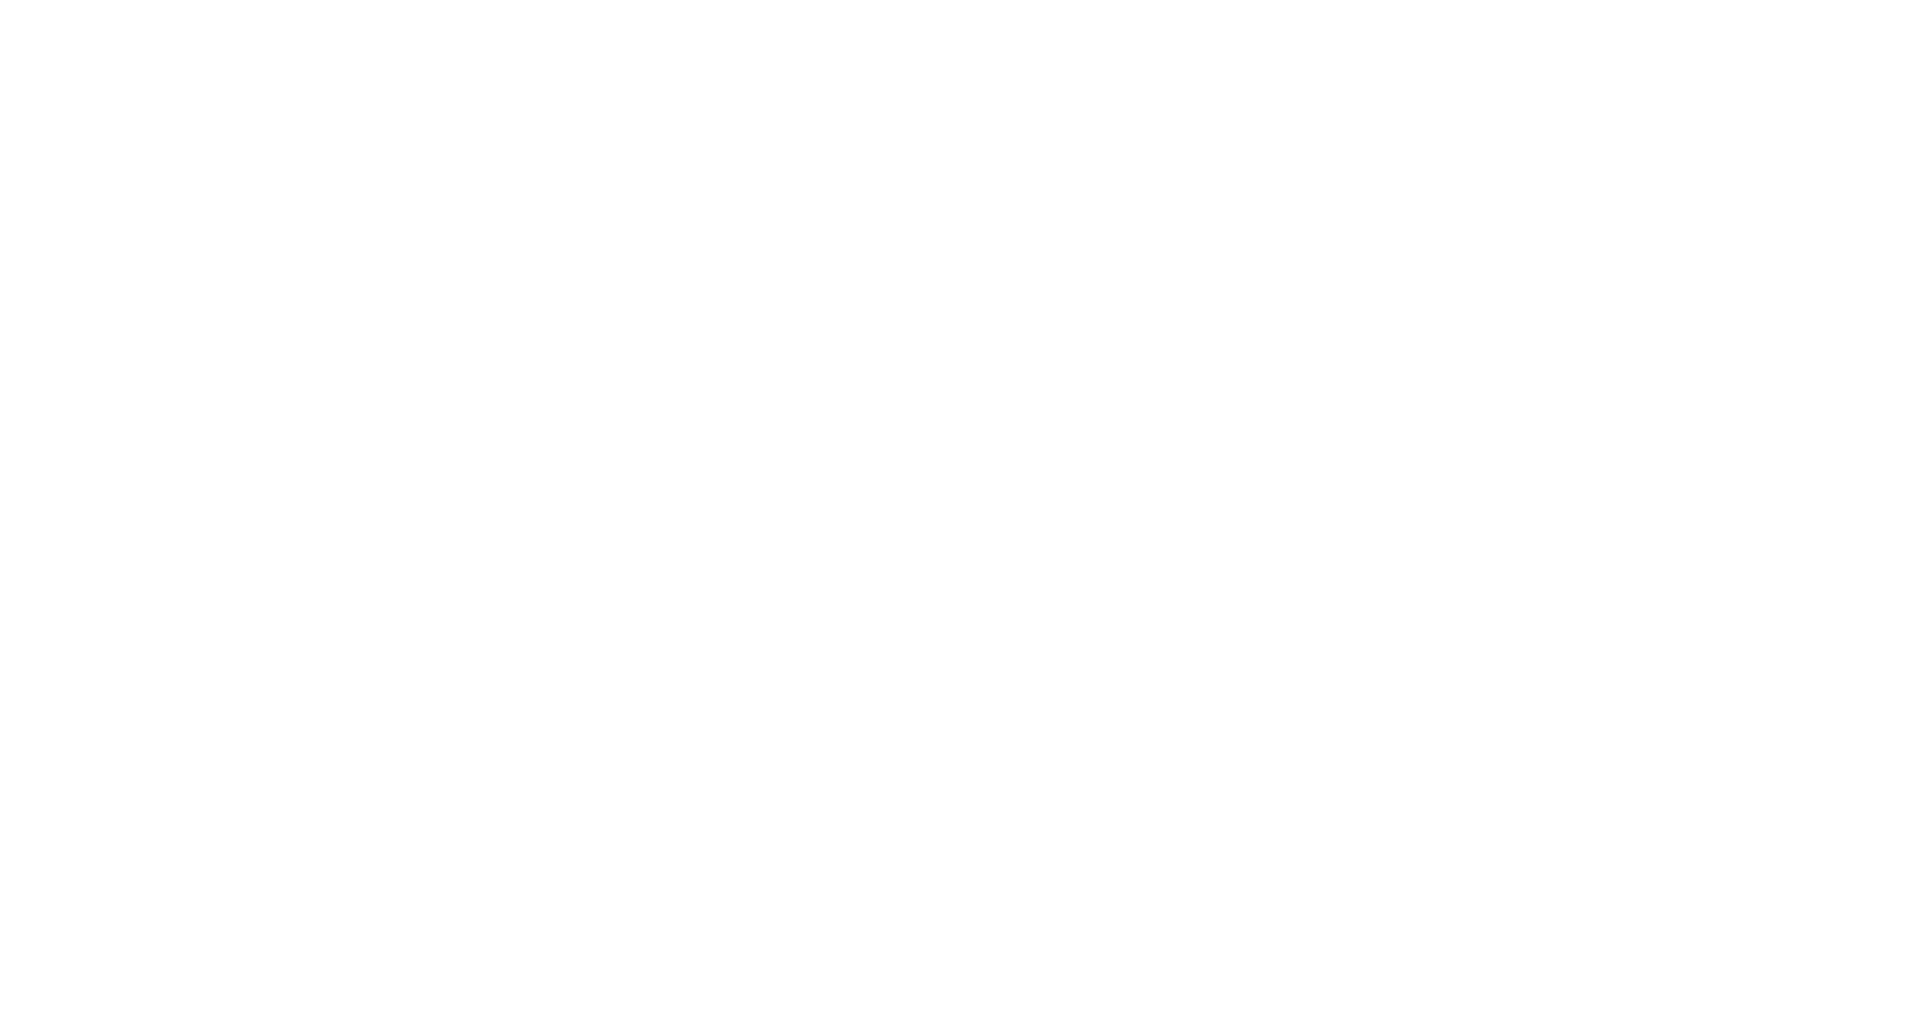 Cross Creek Apartments logo